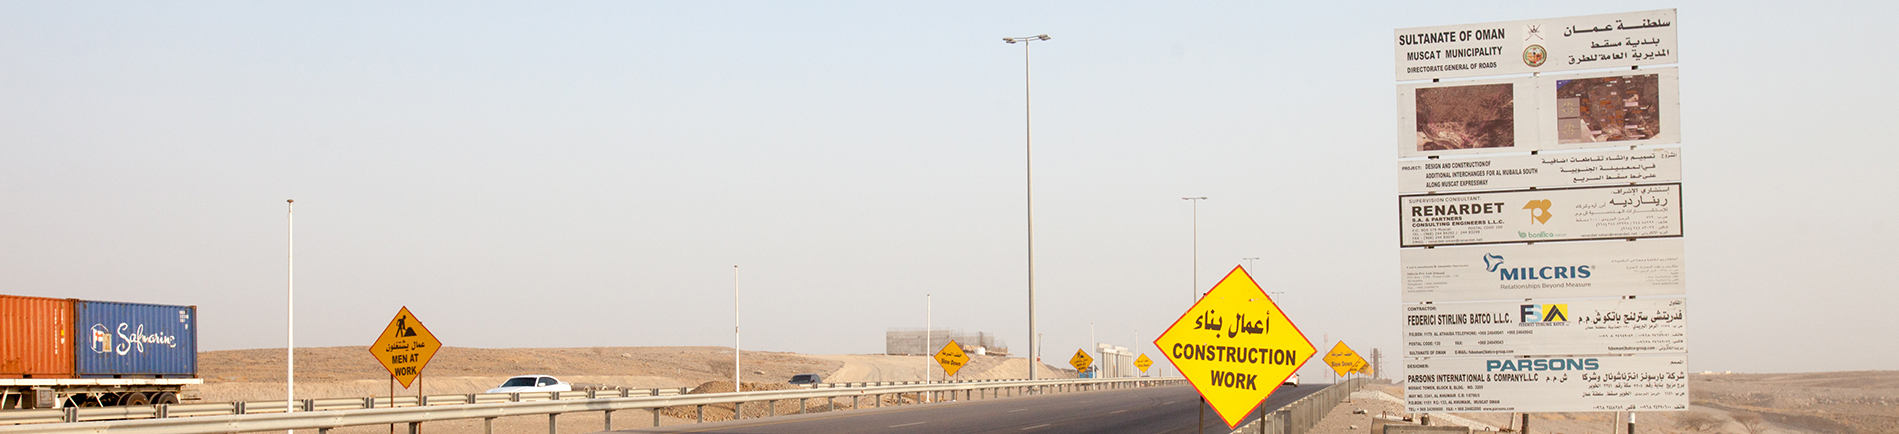 Al Mubaila South Additional Interchanges